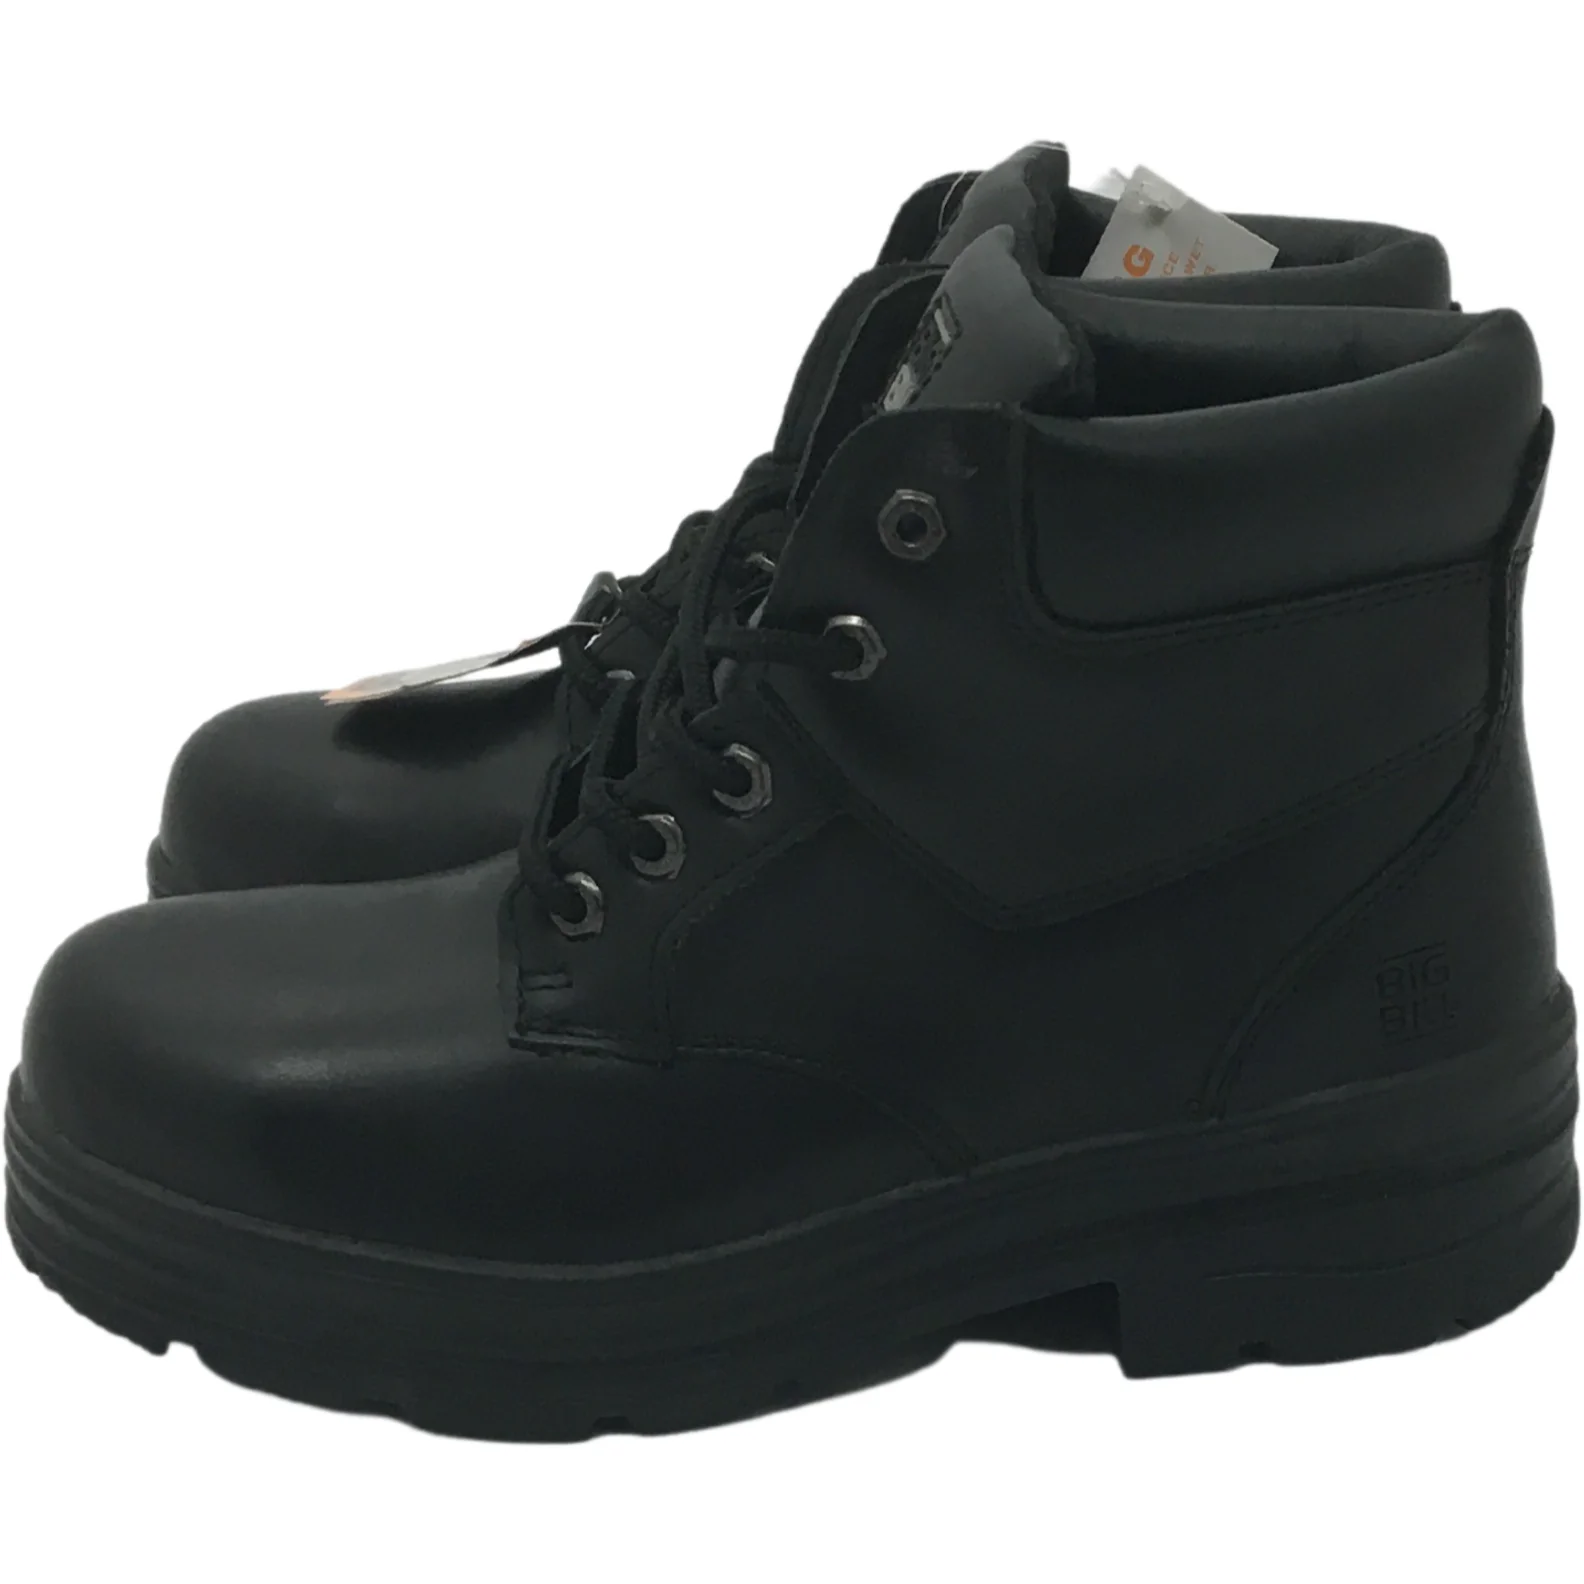 Big Bill Footwear Men's Safety Boots / Work Boots / BB 3000 / Black / Size 8